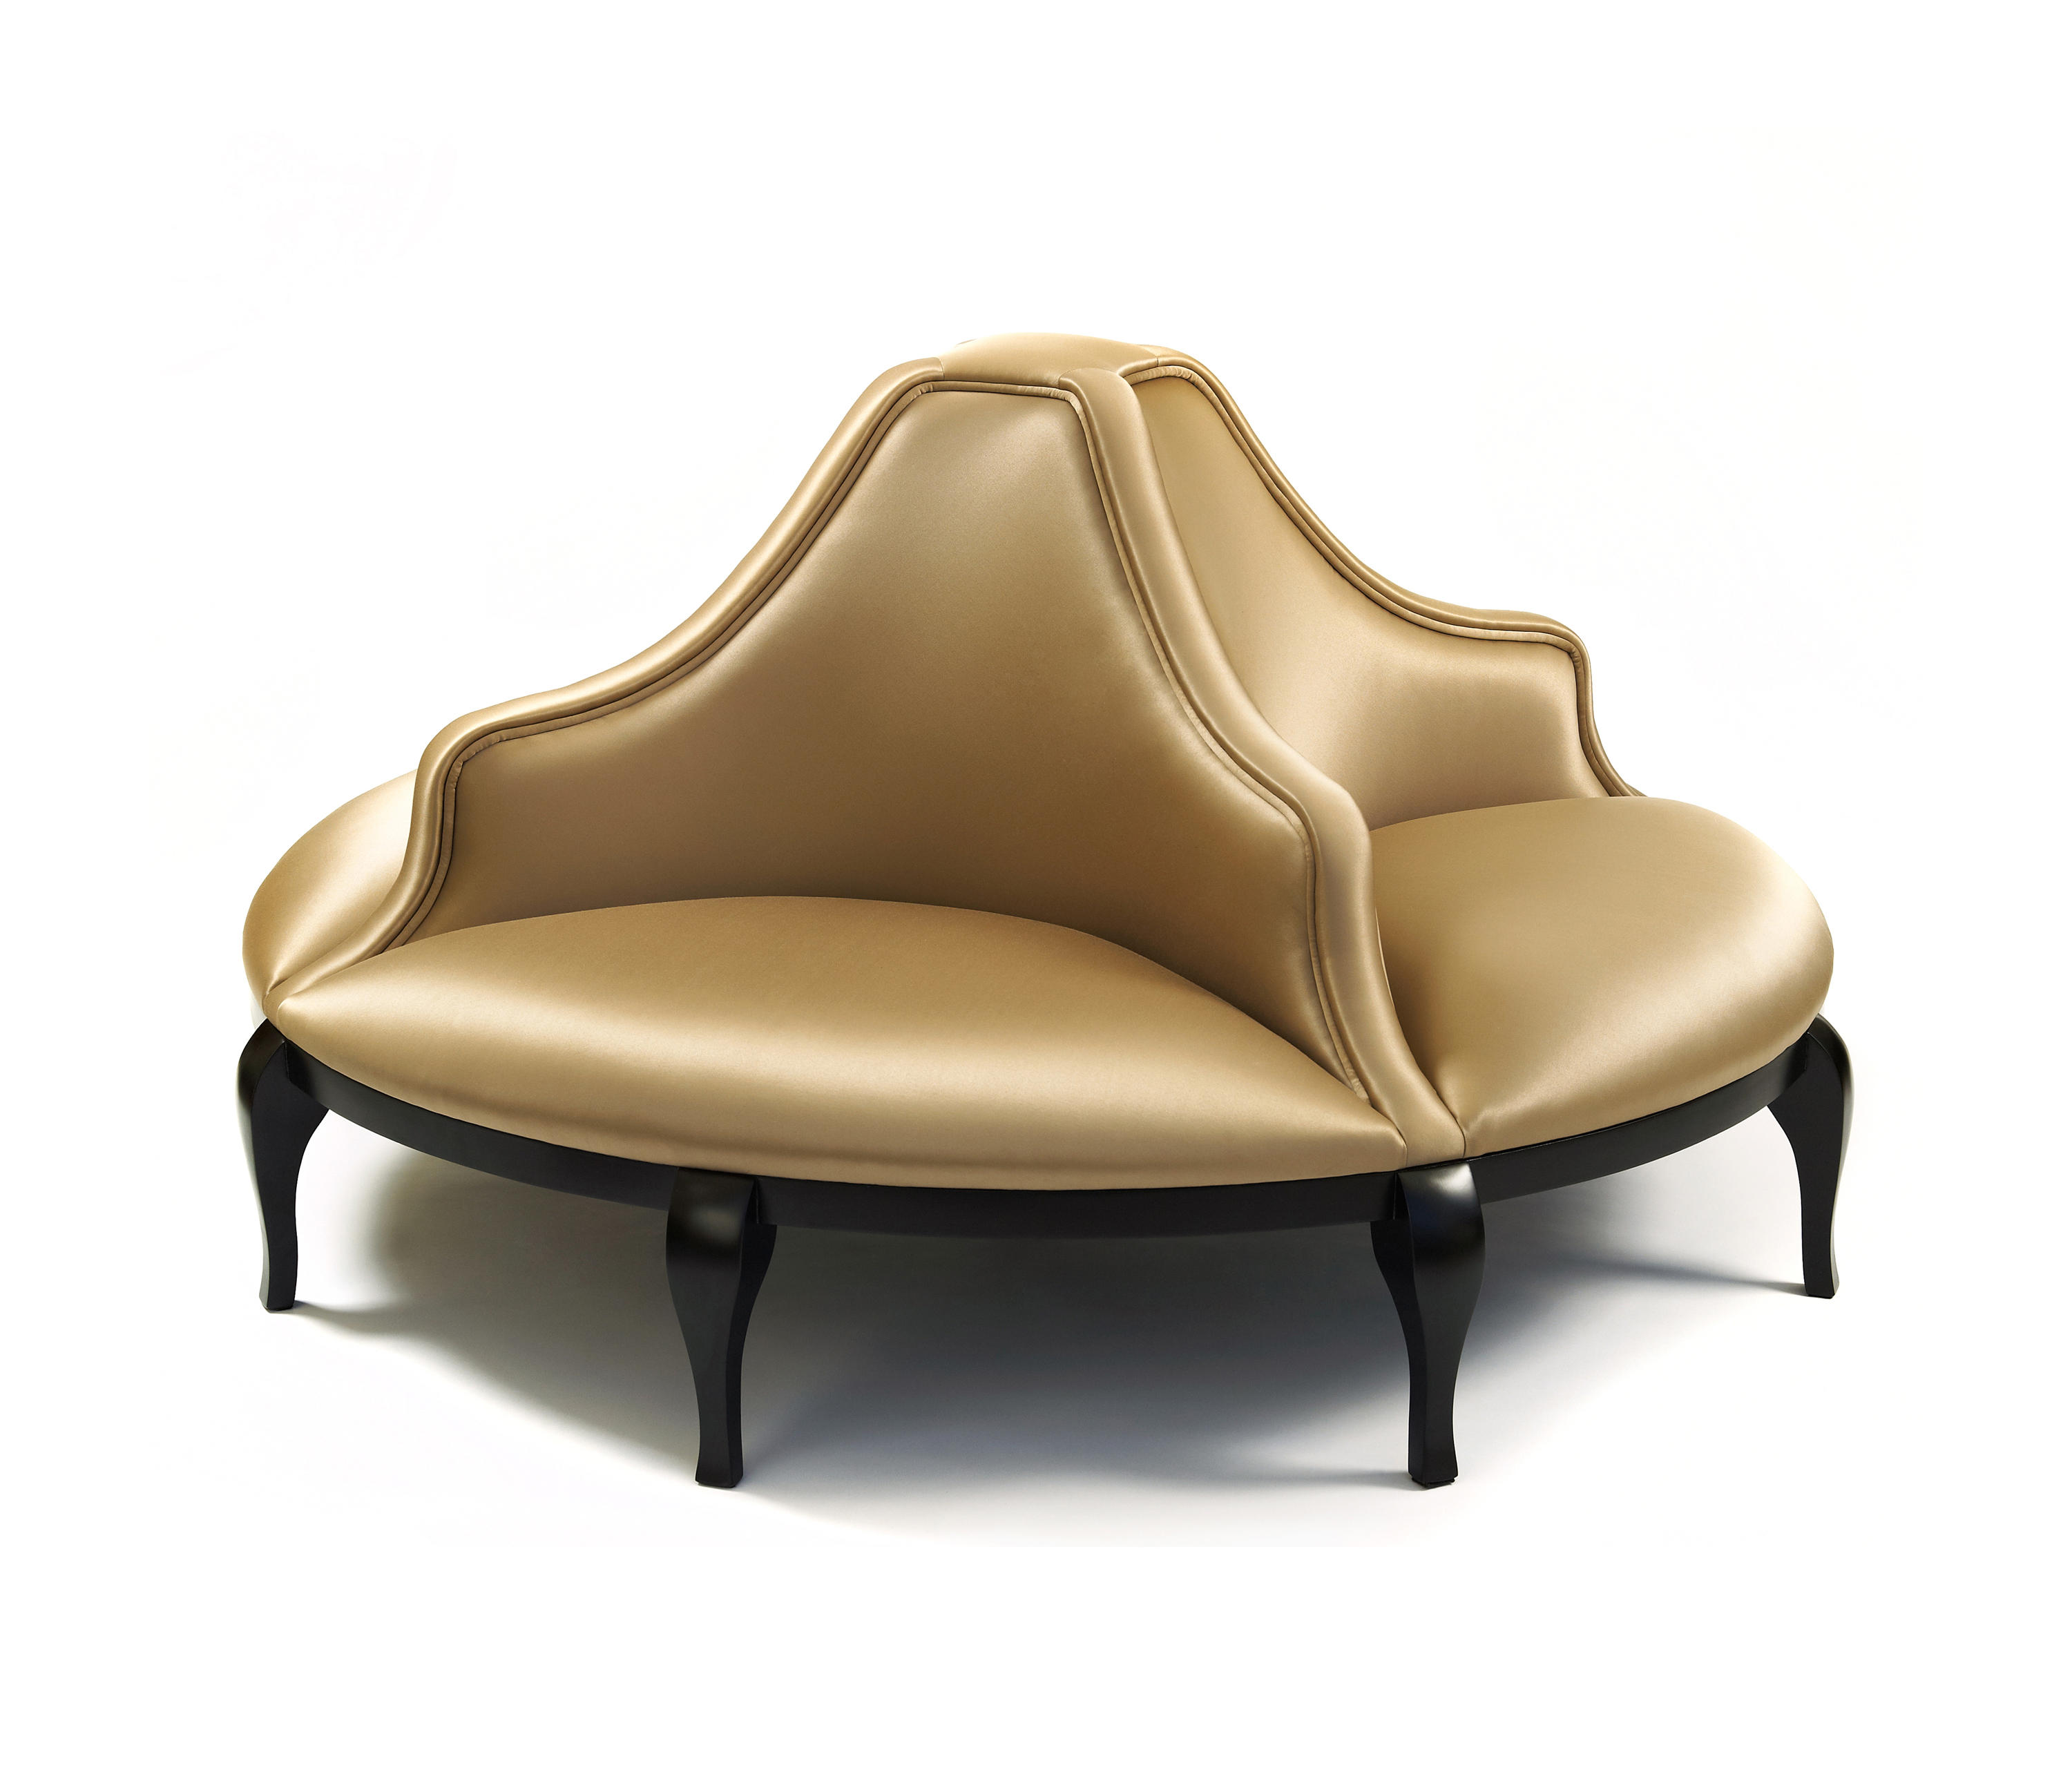 Madeleine |  round sofa by munna |  Sofas ... MLYOAGR